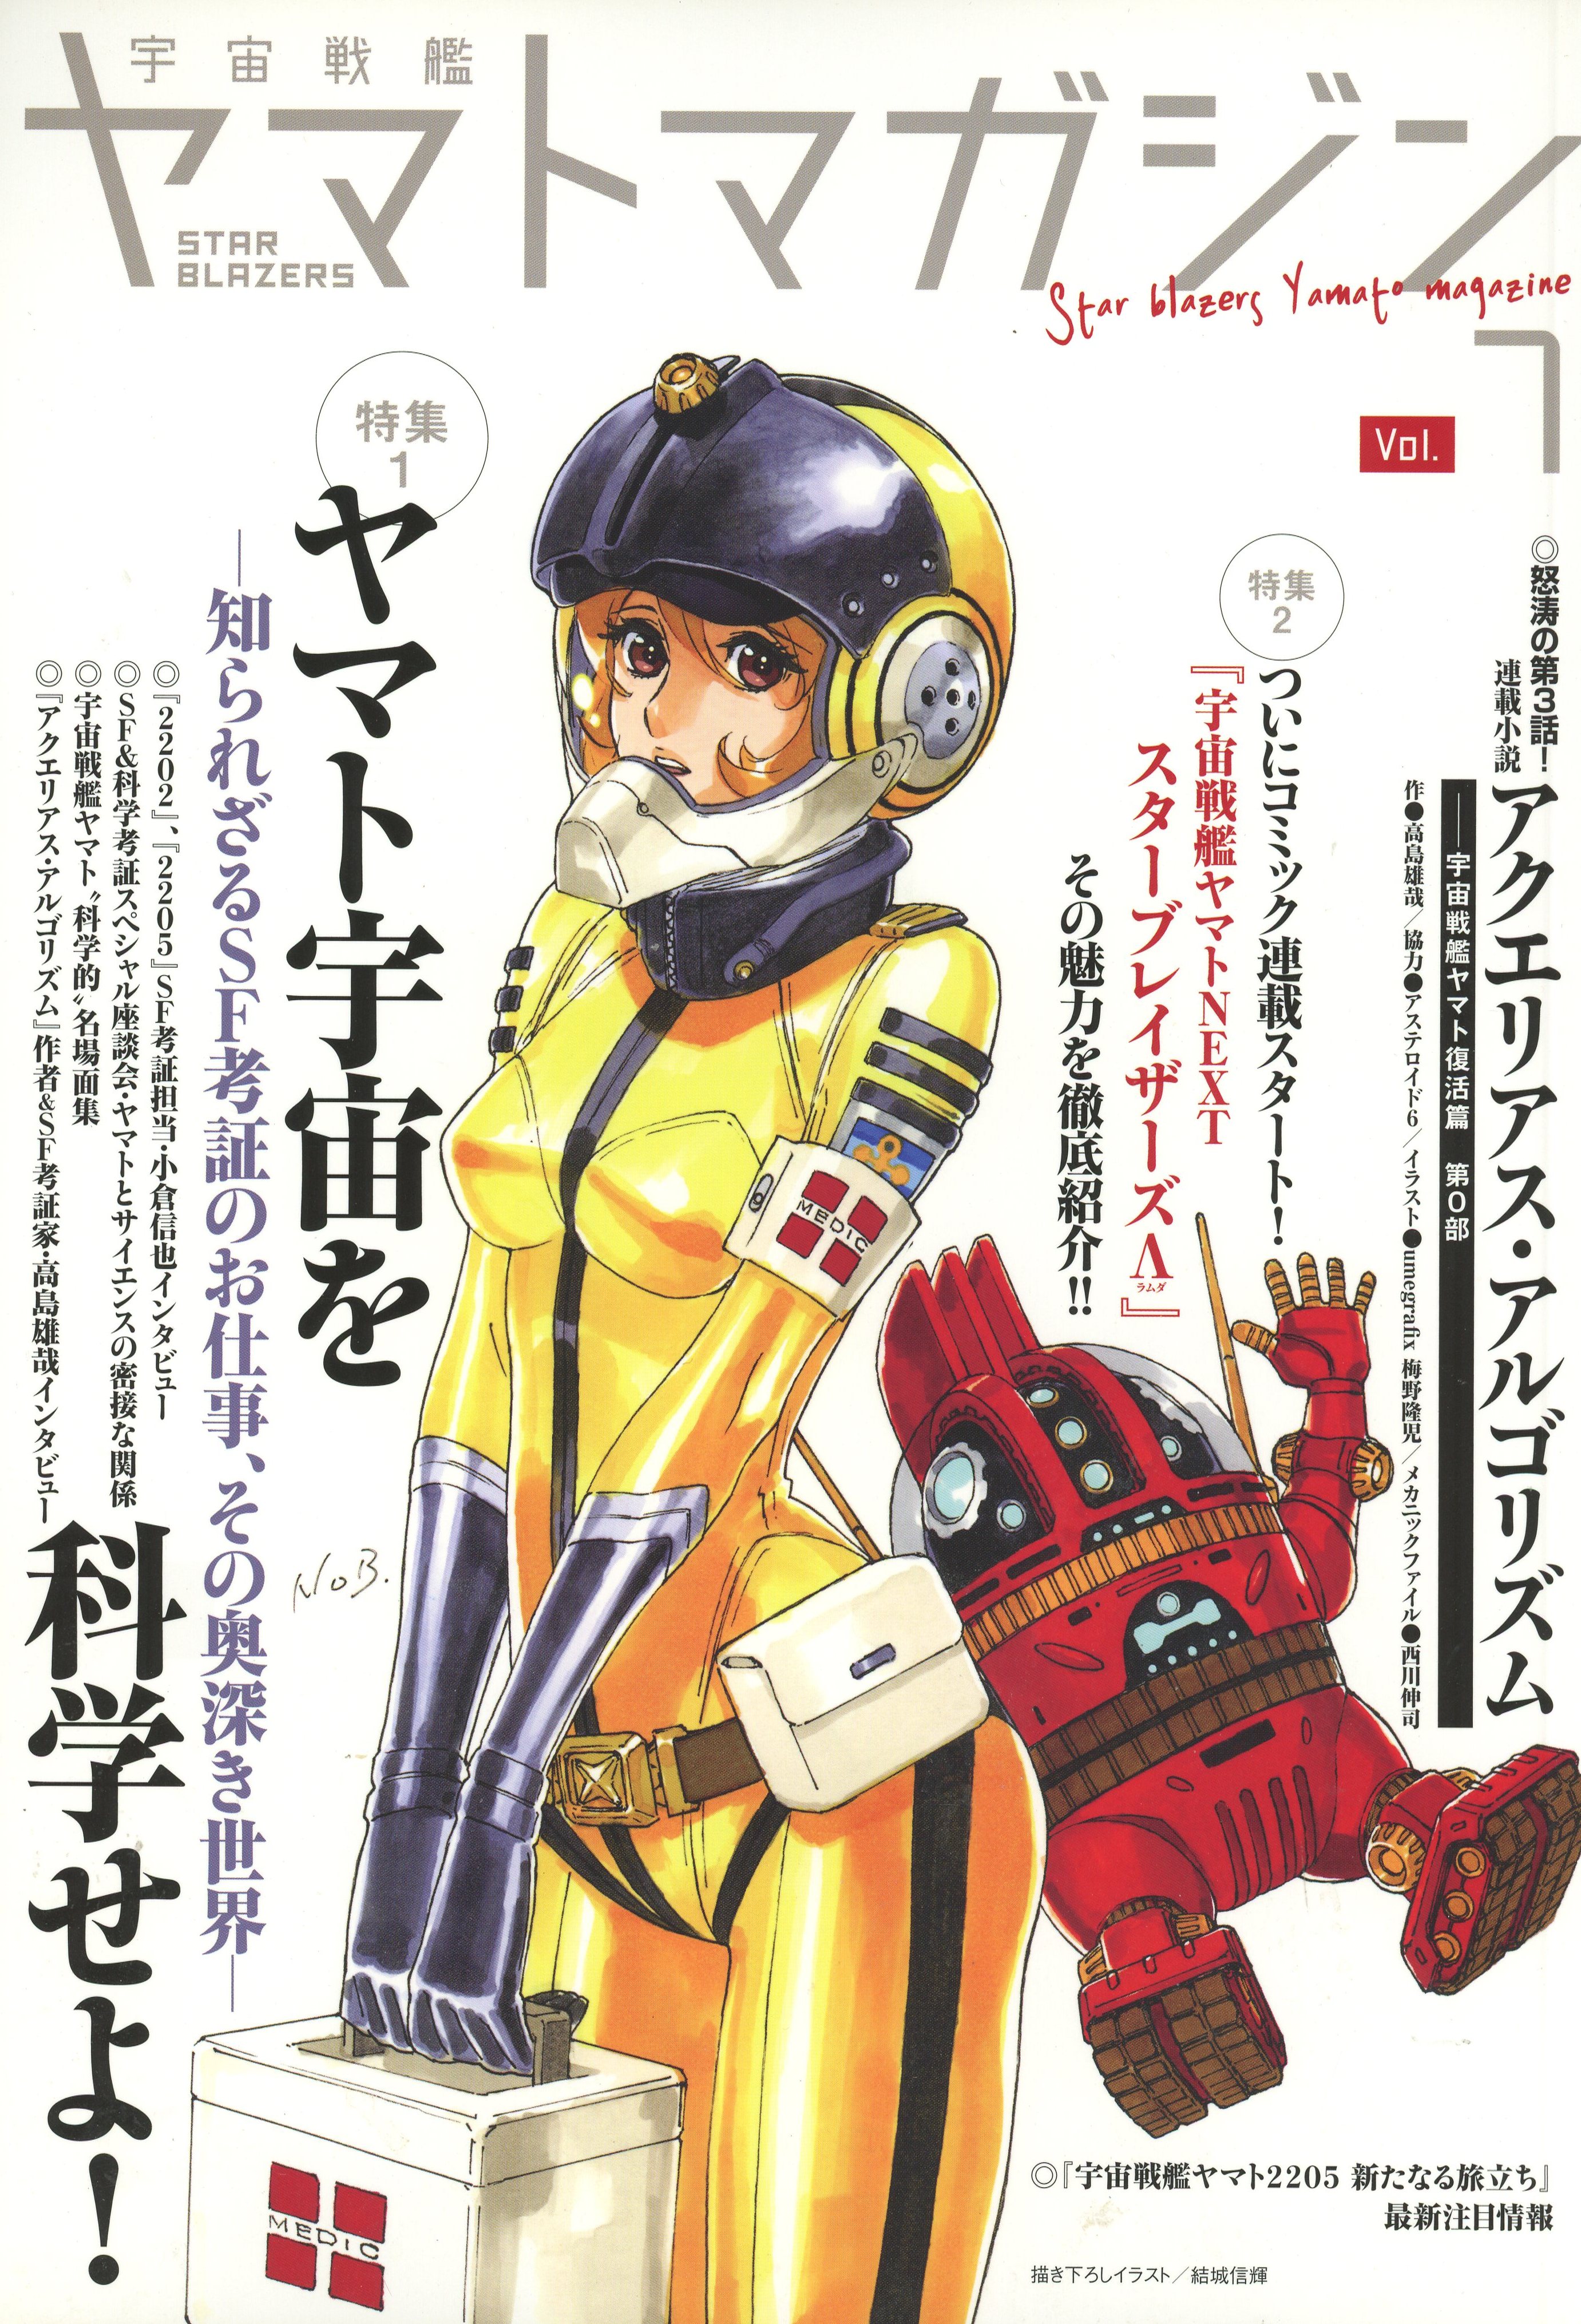 MAGAZINE　FUN　Online　Shop　Co.,　Crew　Yamato　Senkan　VOL.07　(Uchu　Yamato　Magazine　STAR　Ltd.　Yamato)　BLAZERS　Battleship　Space　CLUB　Mandarake